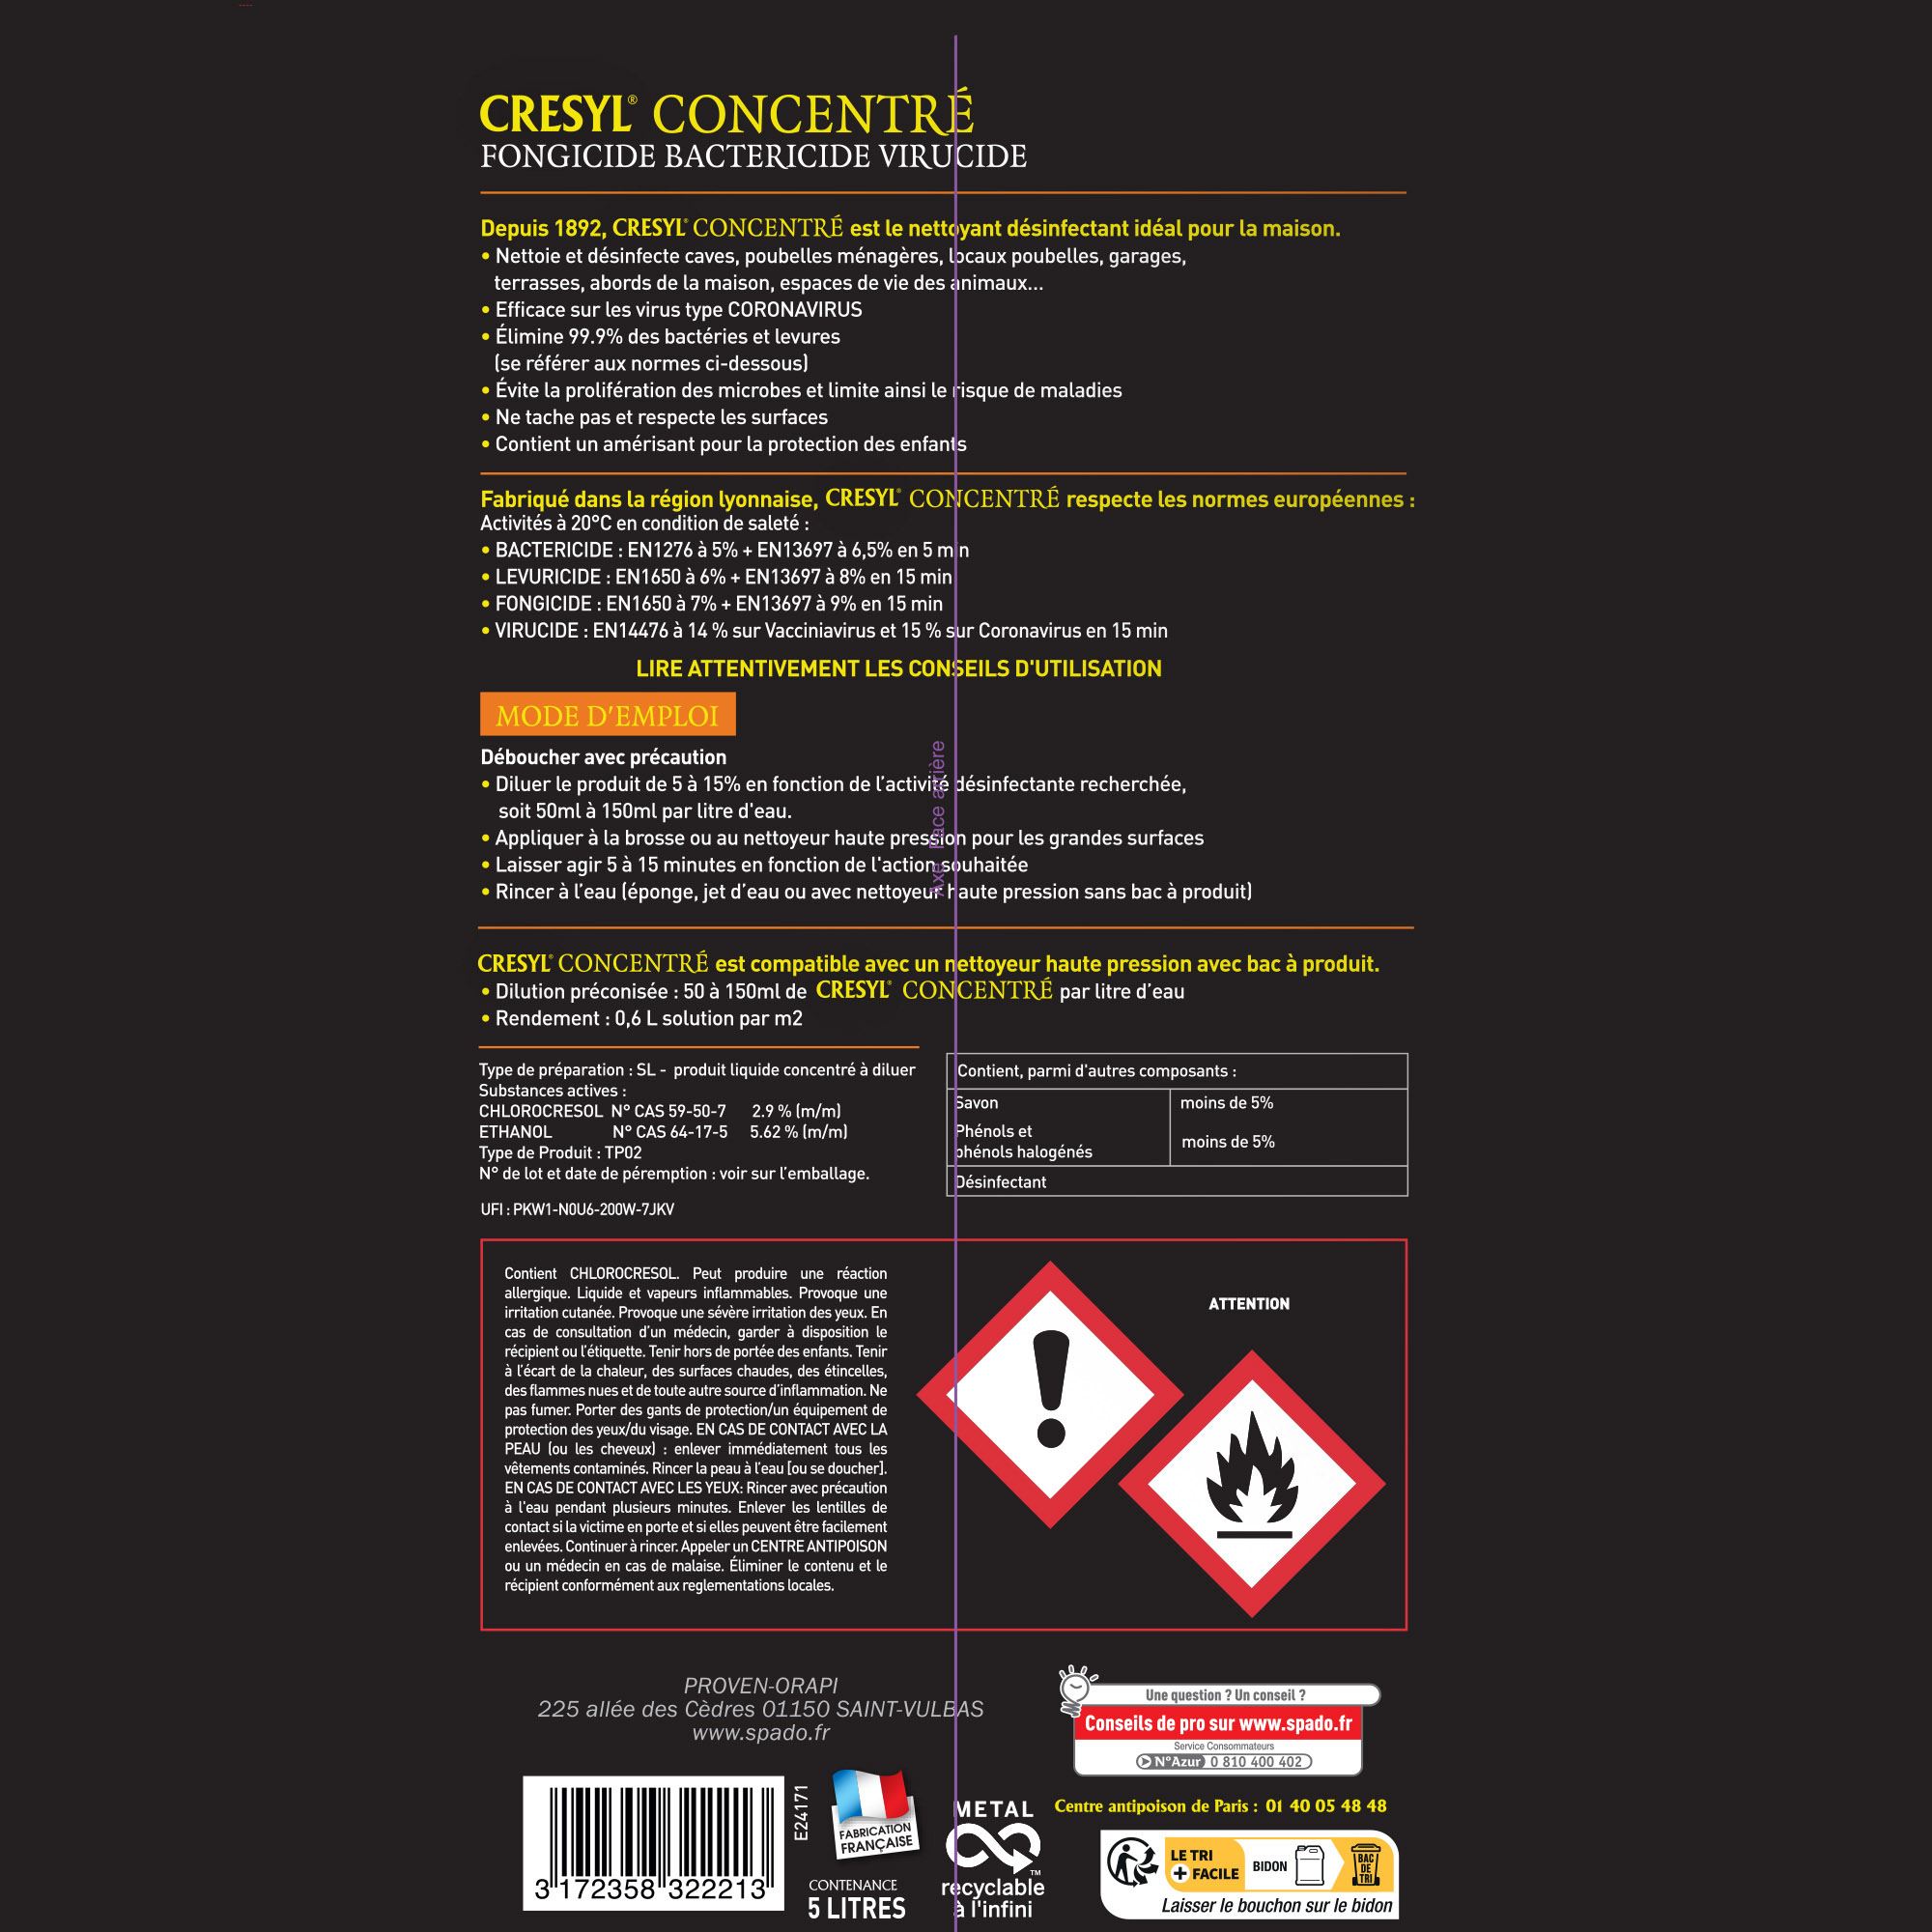 Désinfectant Crésyl - 5 L